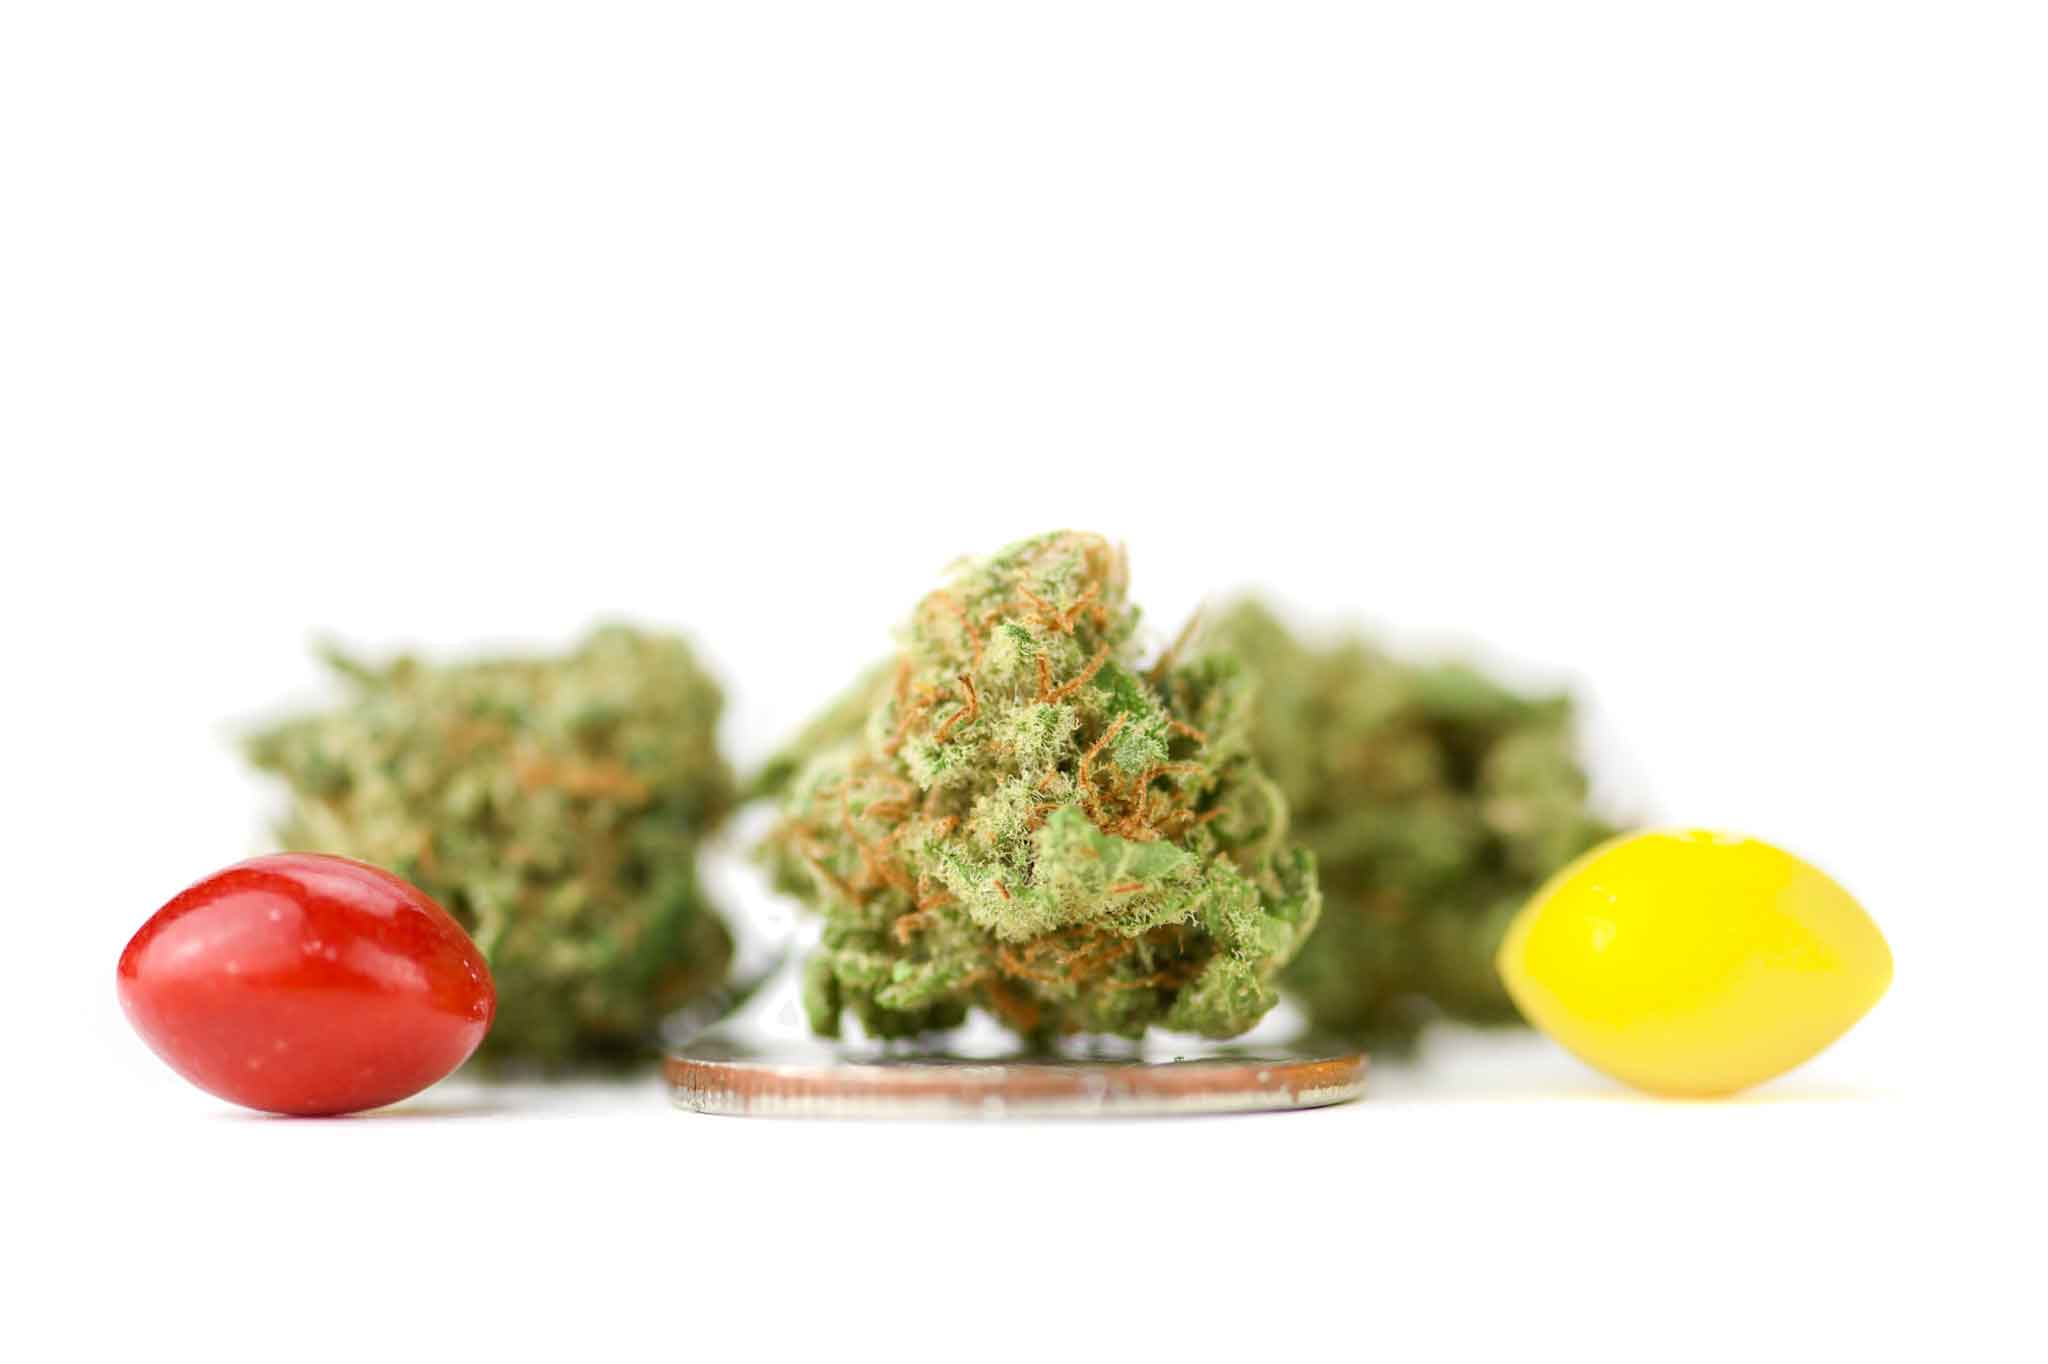 Zkittles CBG cannabis light CBD 29% - Erba Legale Online